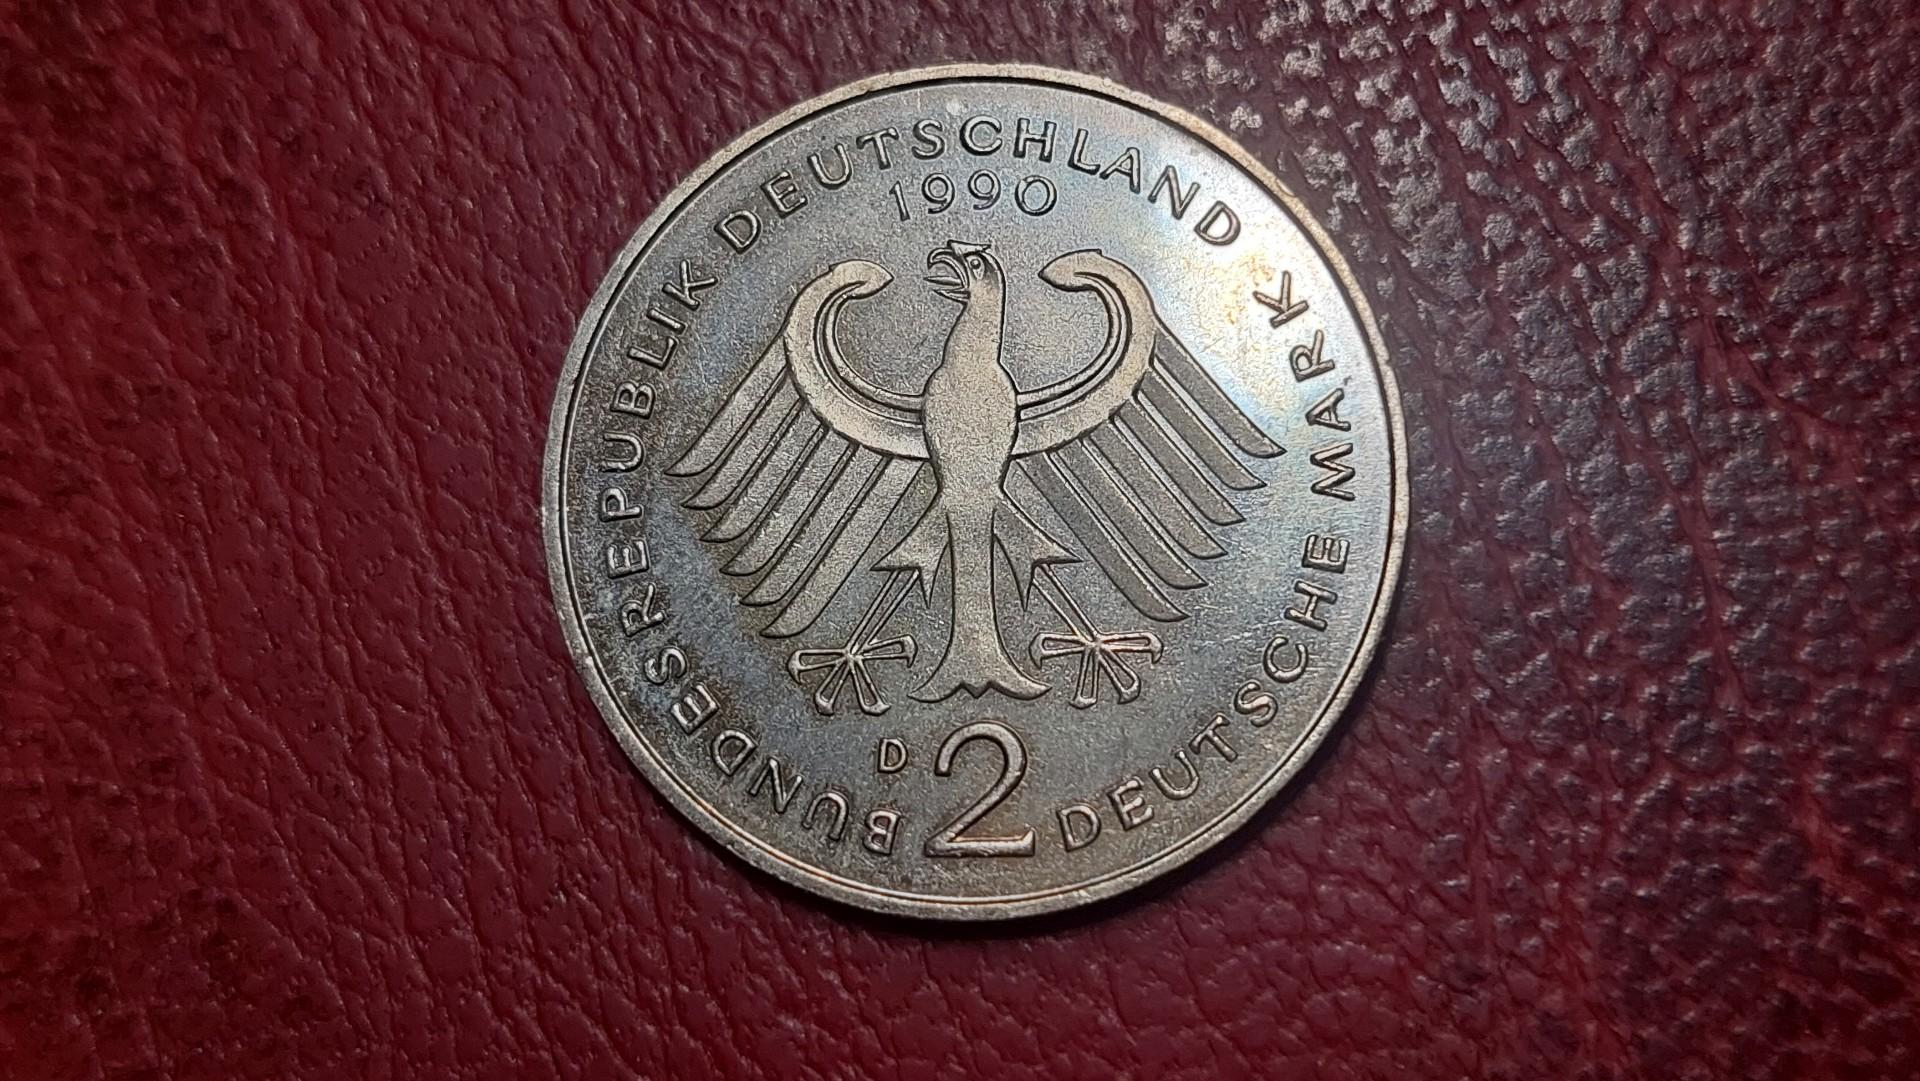 Vokietija 2 markės, 1990D KM# 175 Jozefas Štrausas